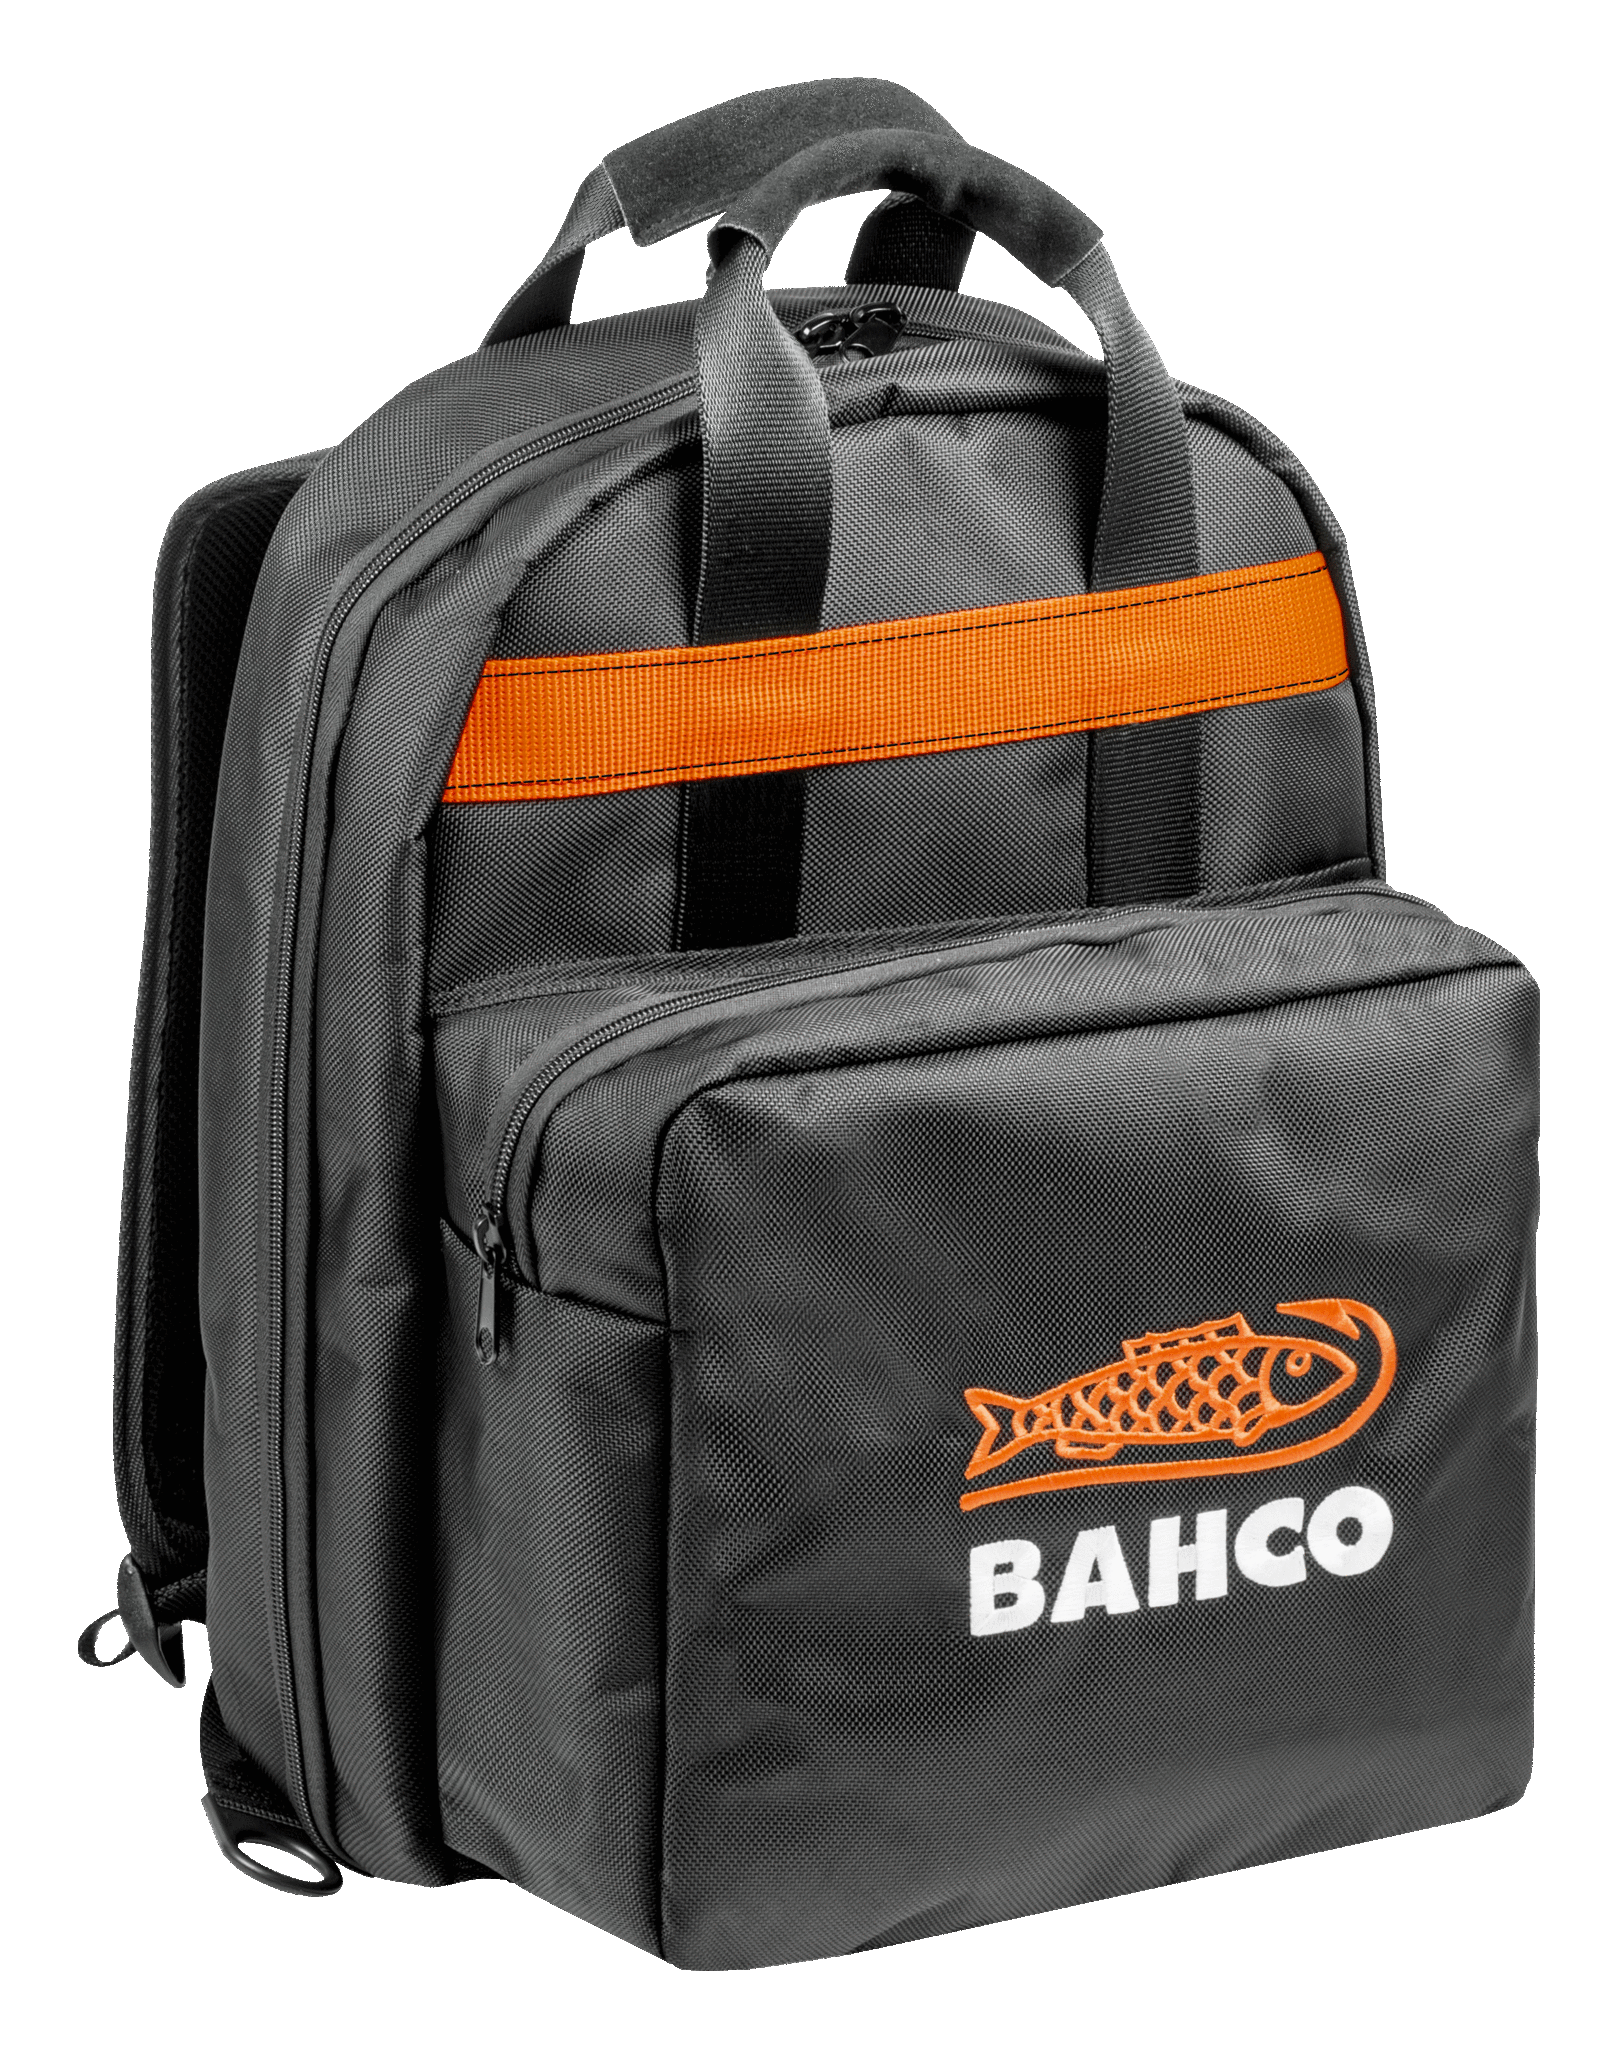 BAHCO(バーコ) Back Pack リュックサック スモール 3875-BP1 - 1